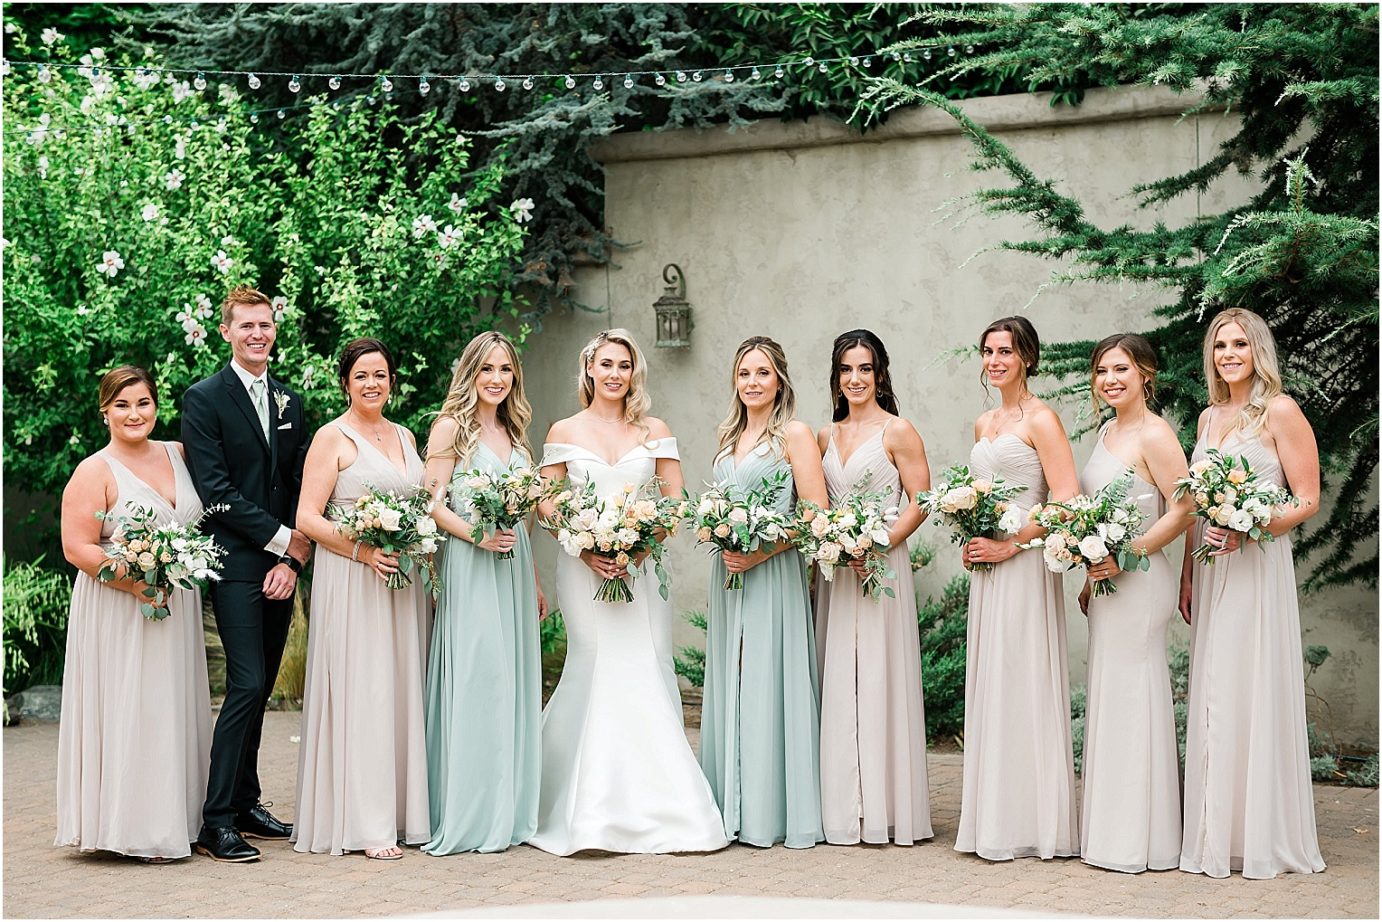 Terra Blanca Winery Wedding Tricities Photographer bride with bridesmaids